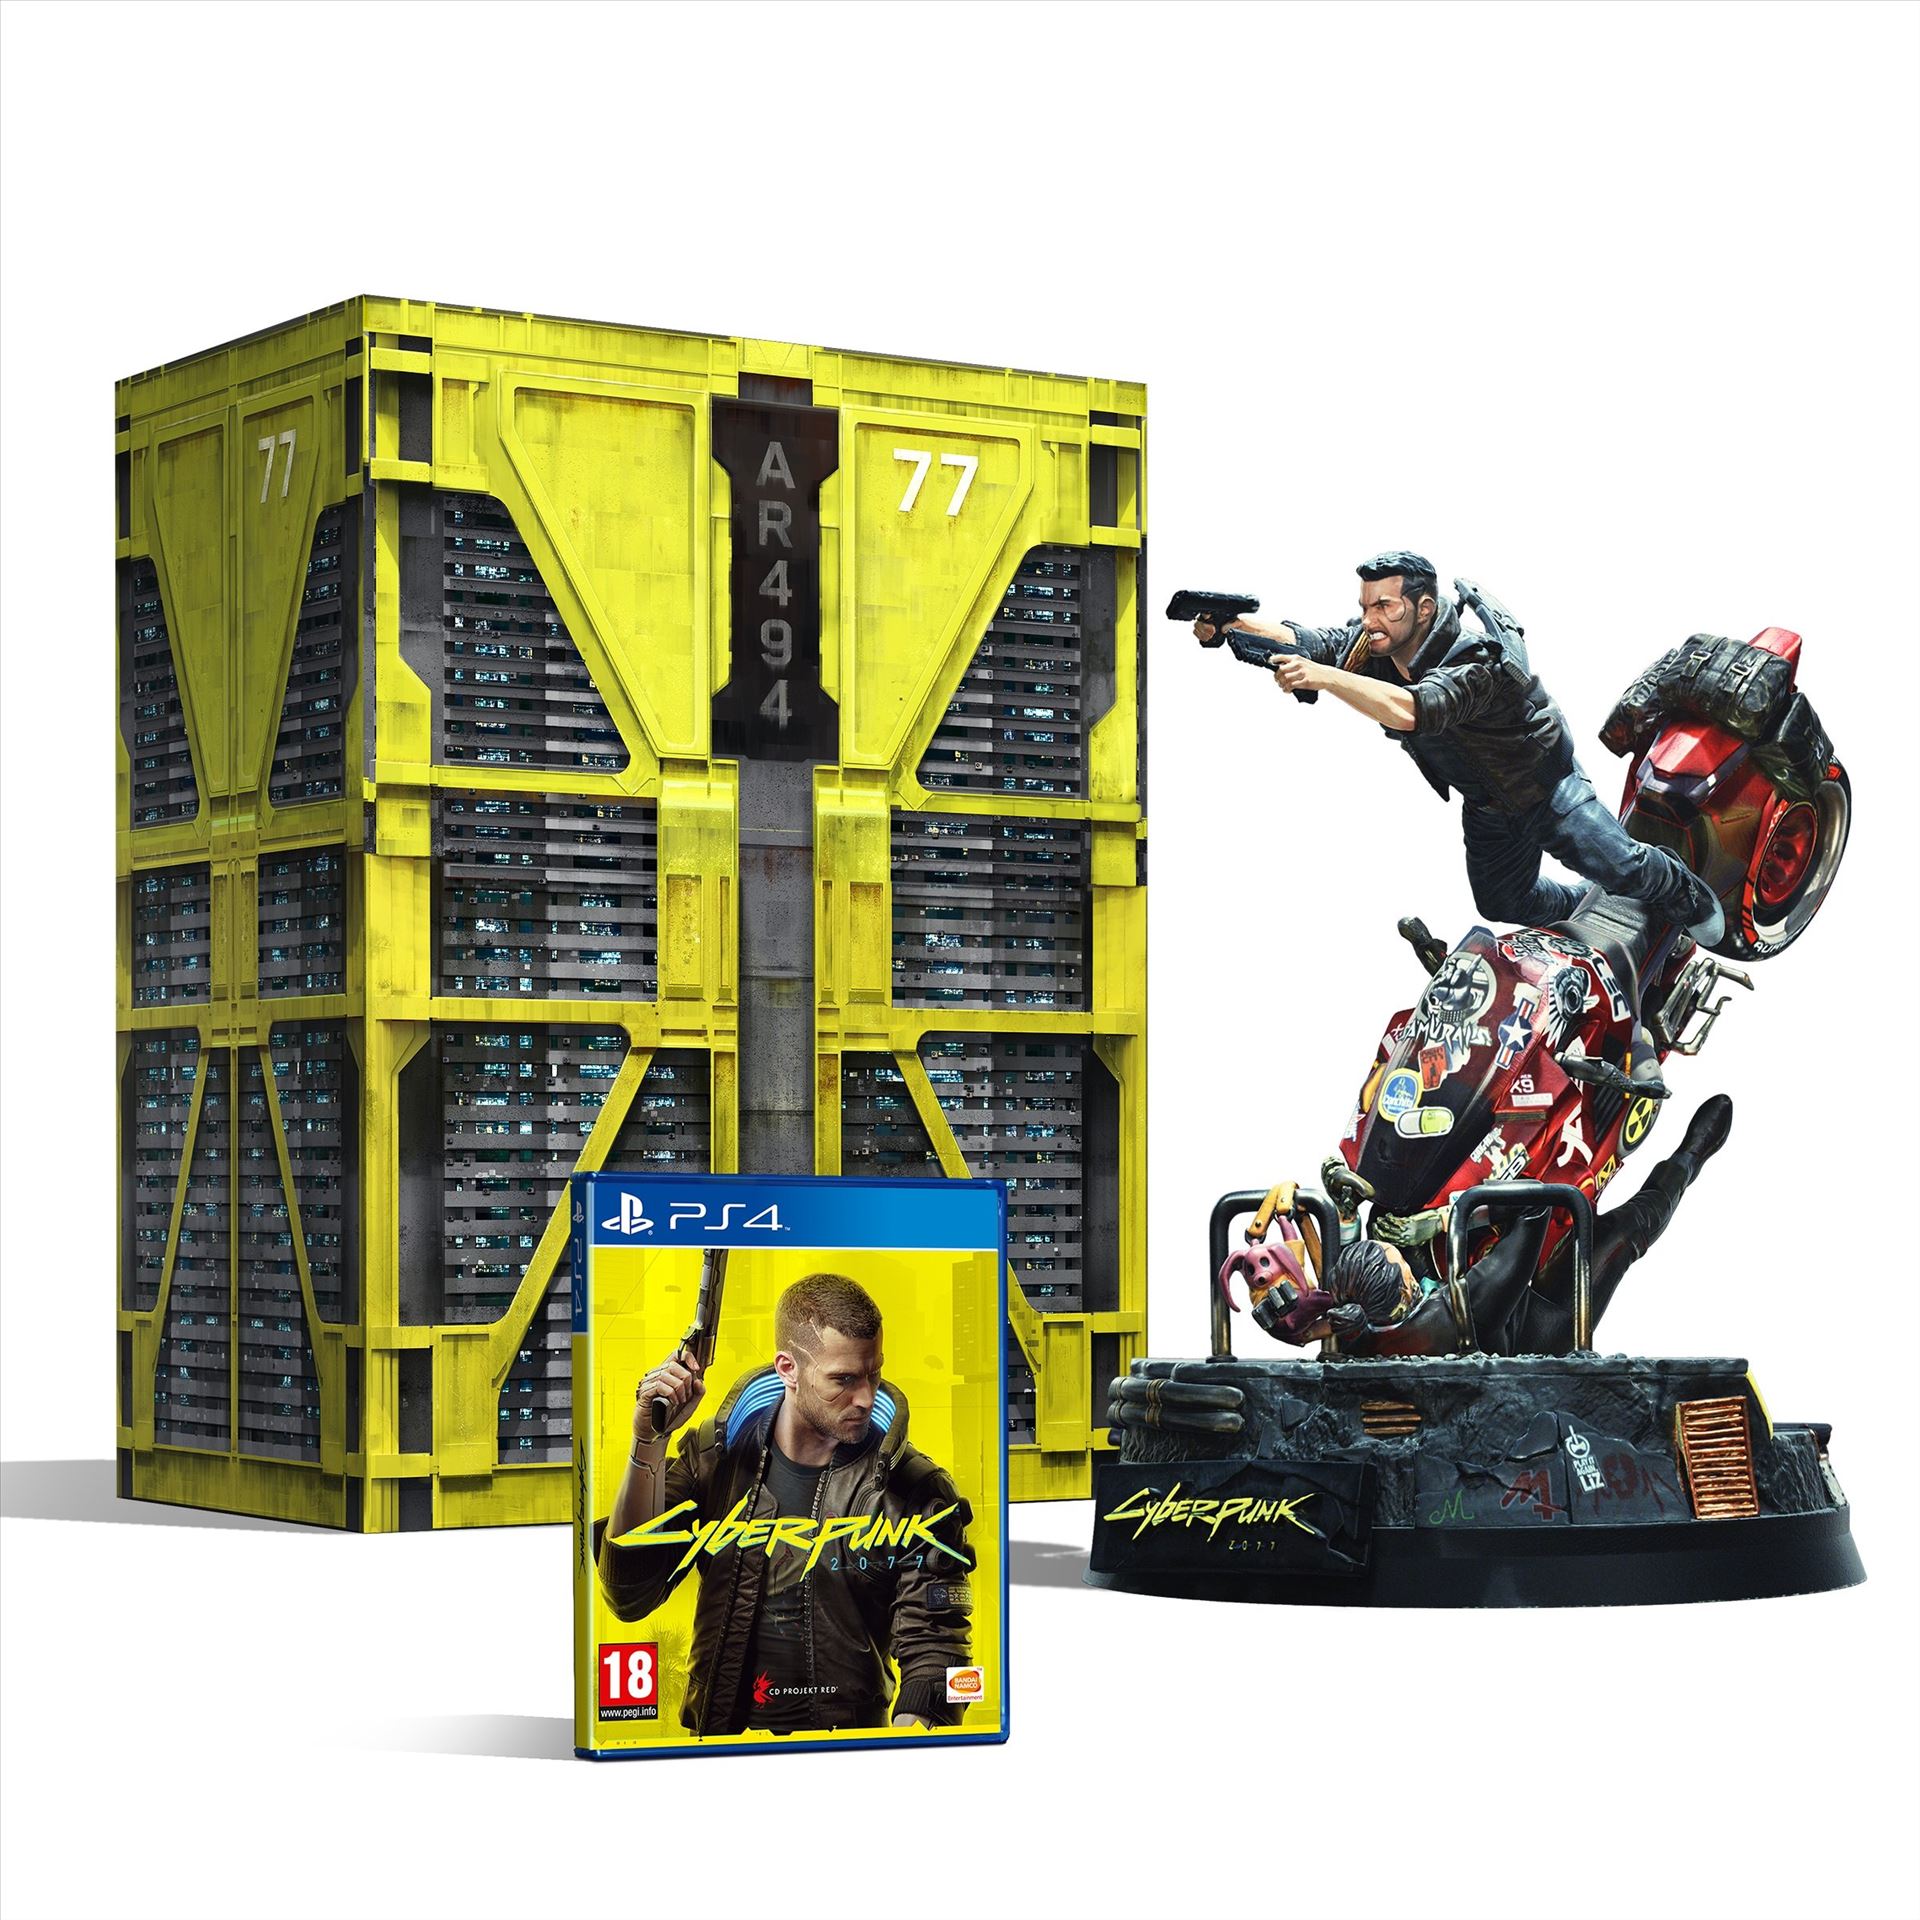 PS4 - Cyberpunk 2077 Collectors